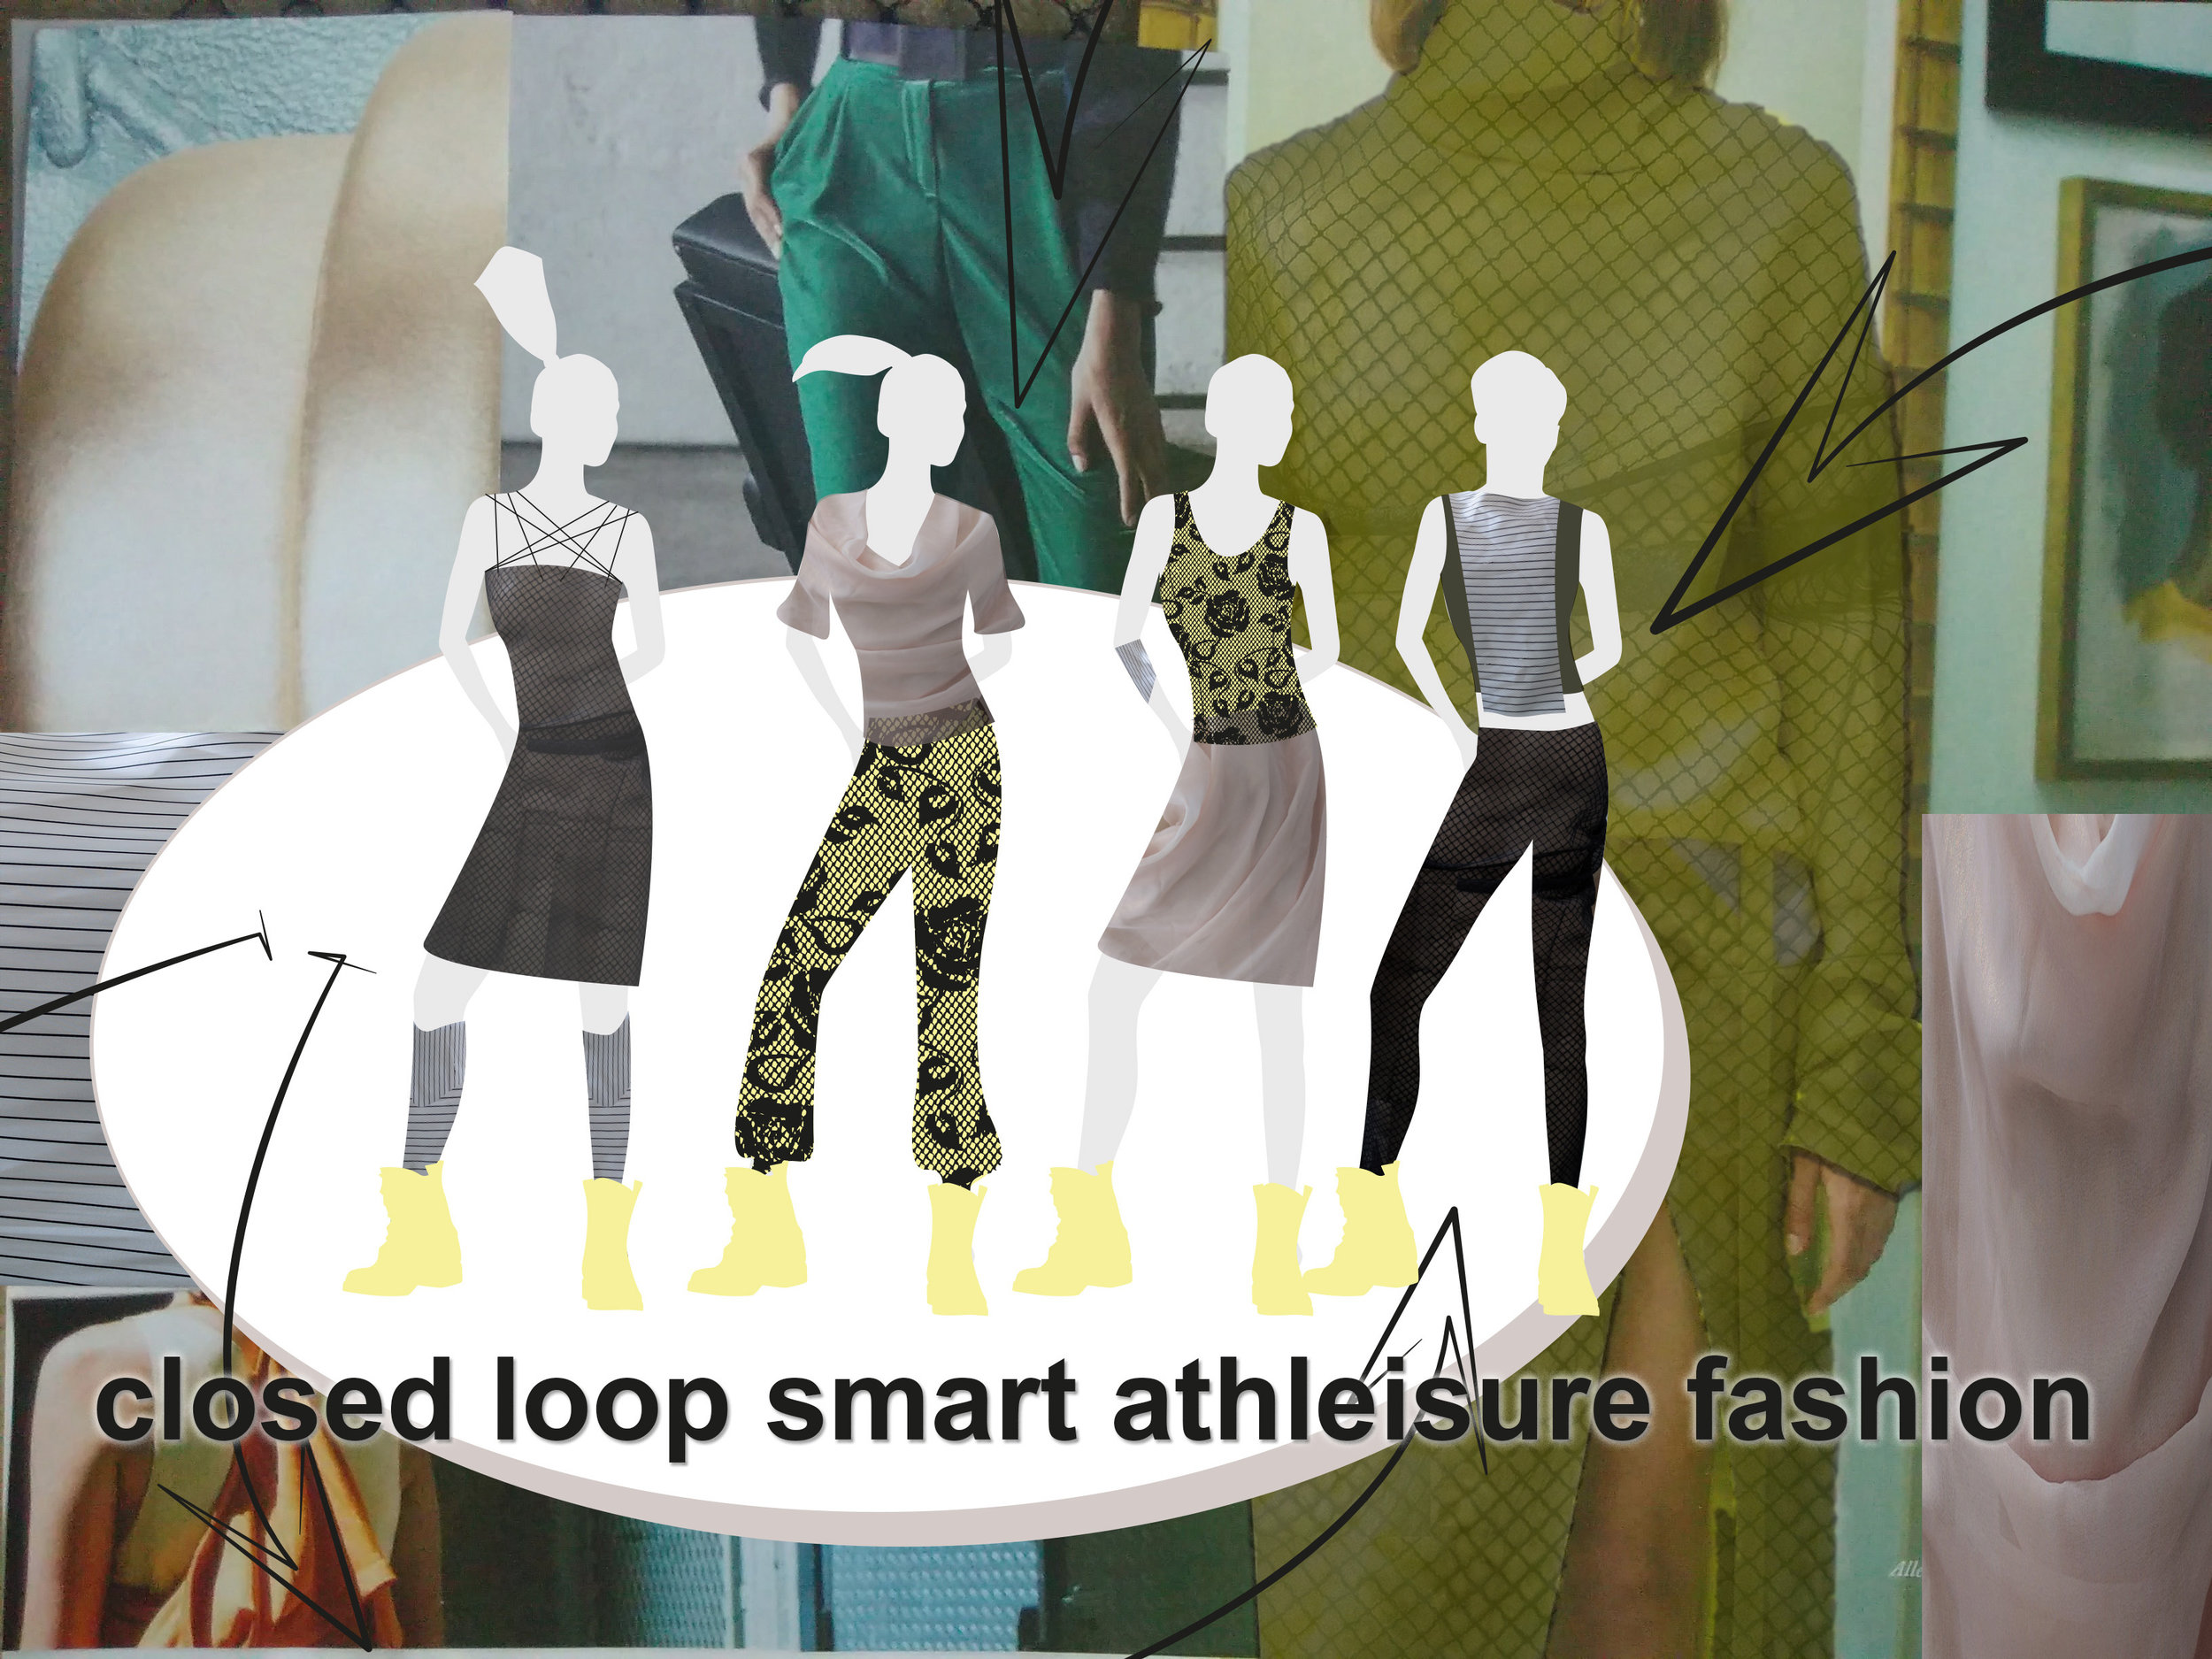 1closed_loop_smart_athleisure_fashion_title (1).jpg